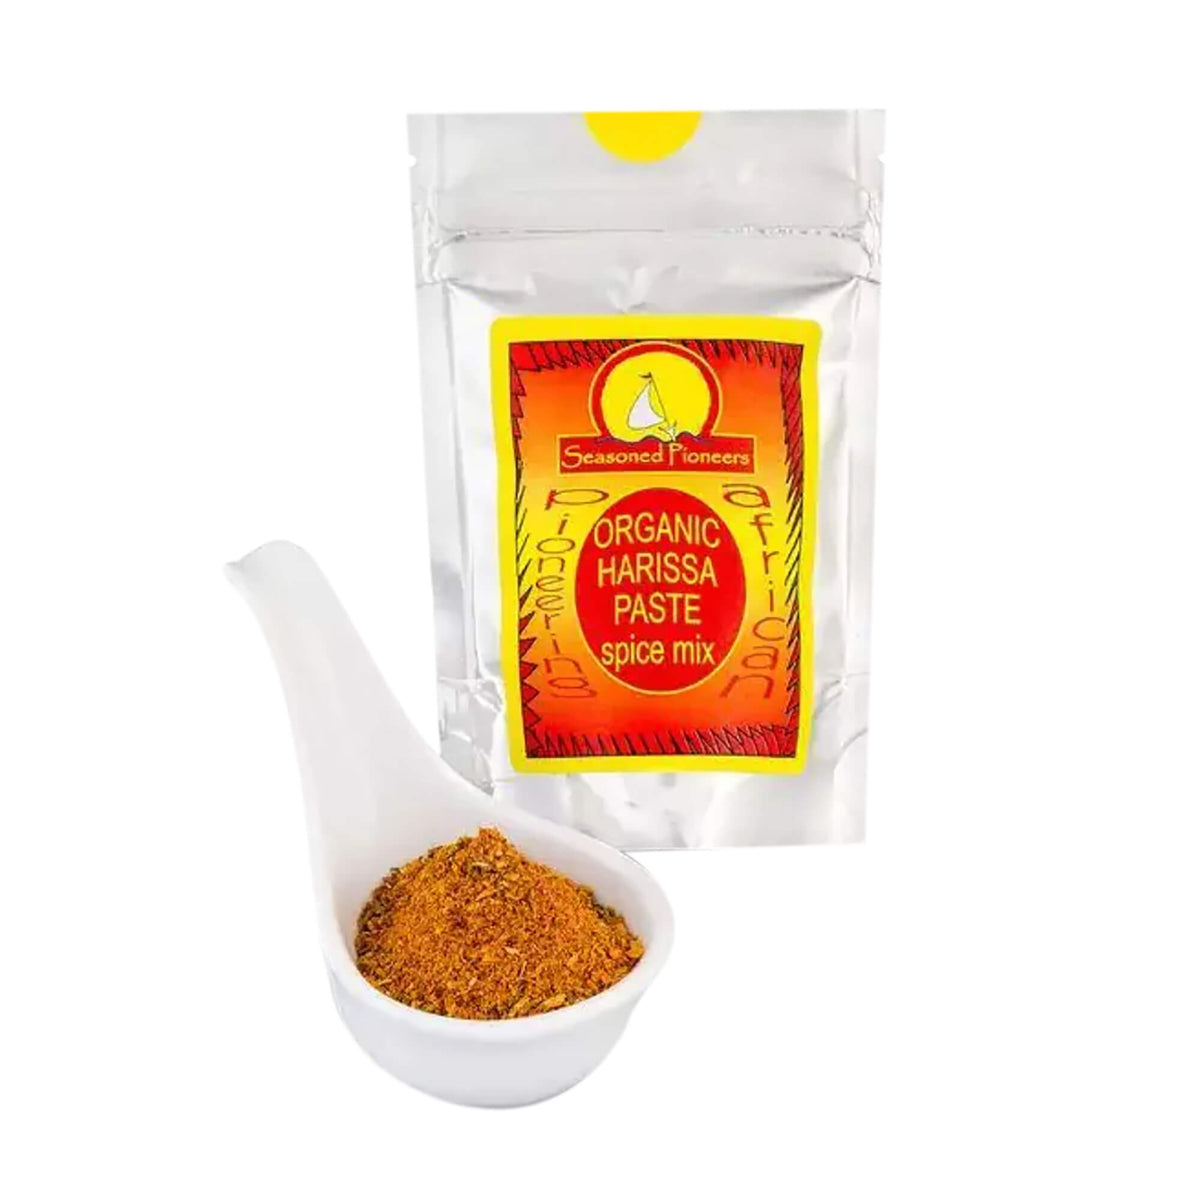 Harissa Spice Mix Organic (27g) - Seasoned Pioneers